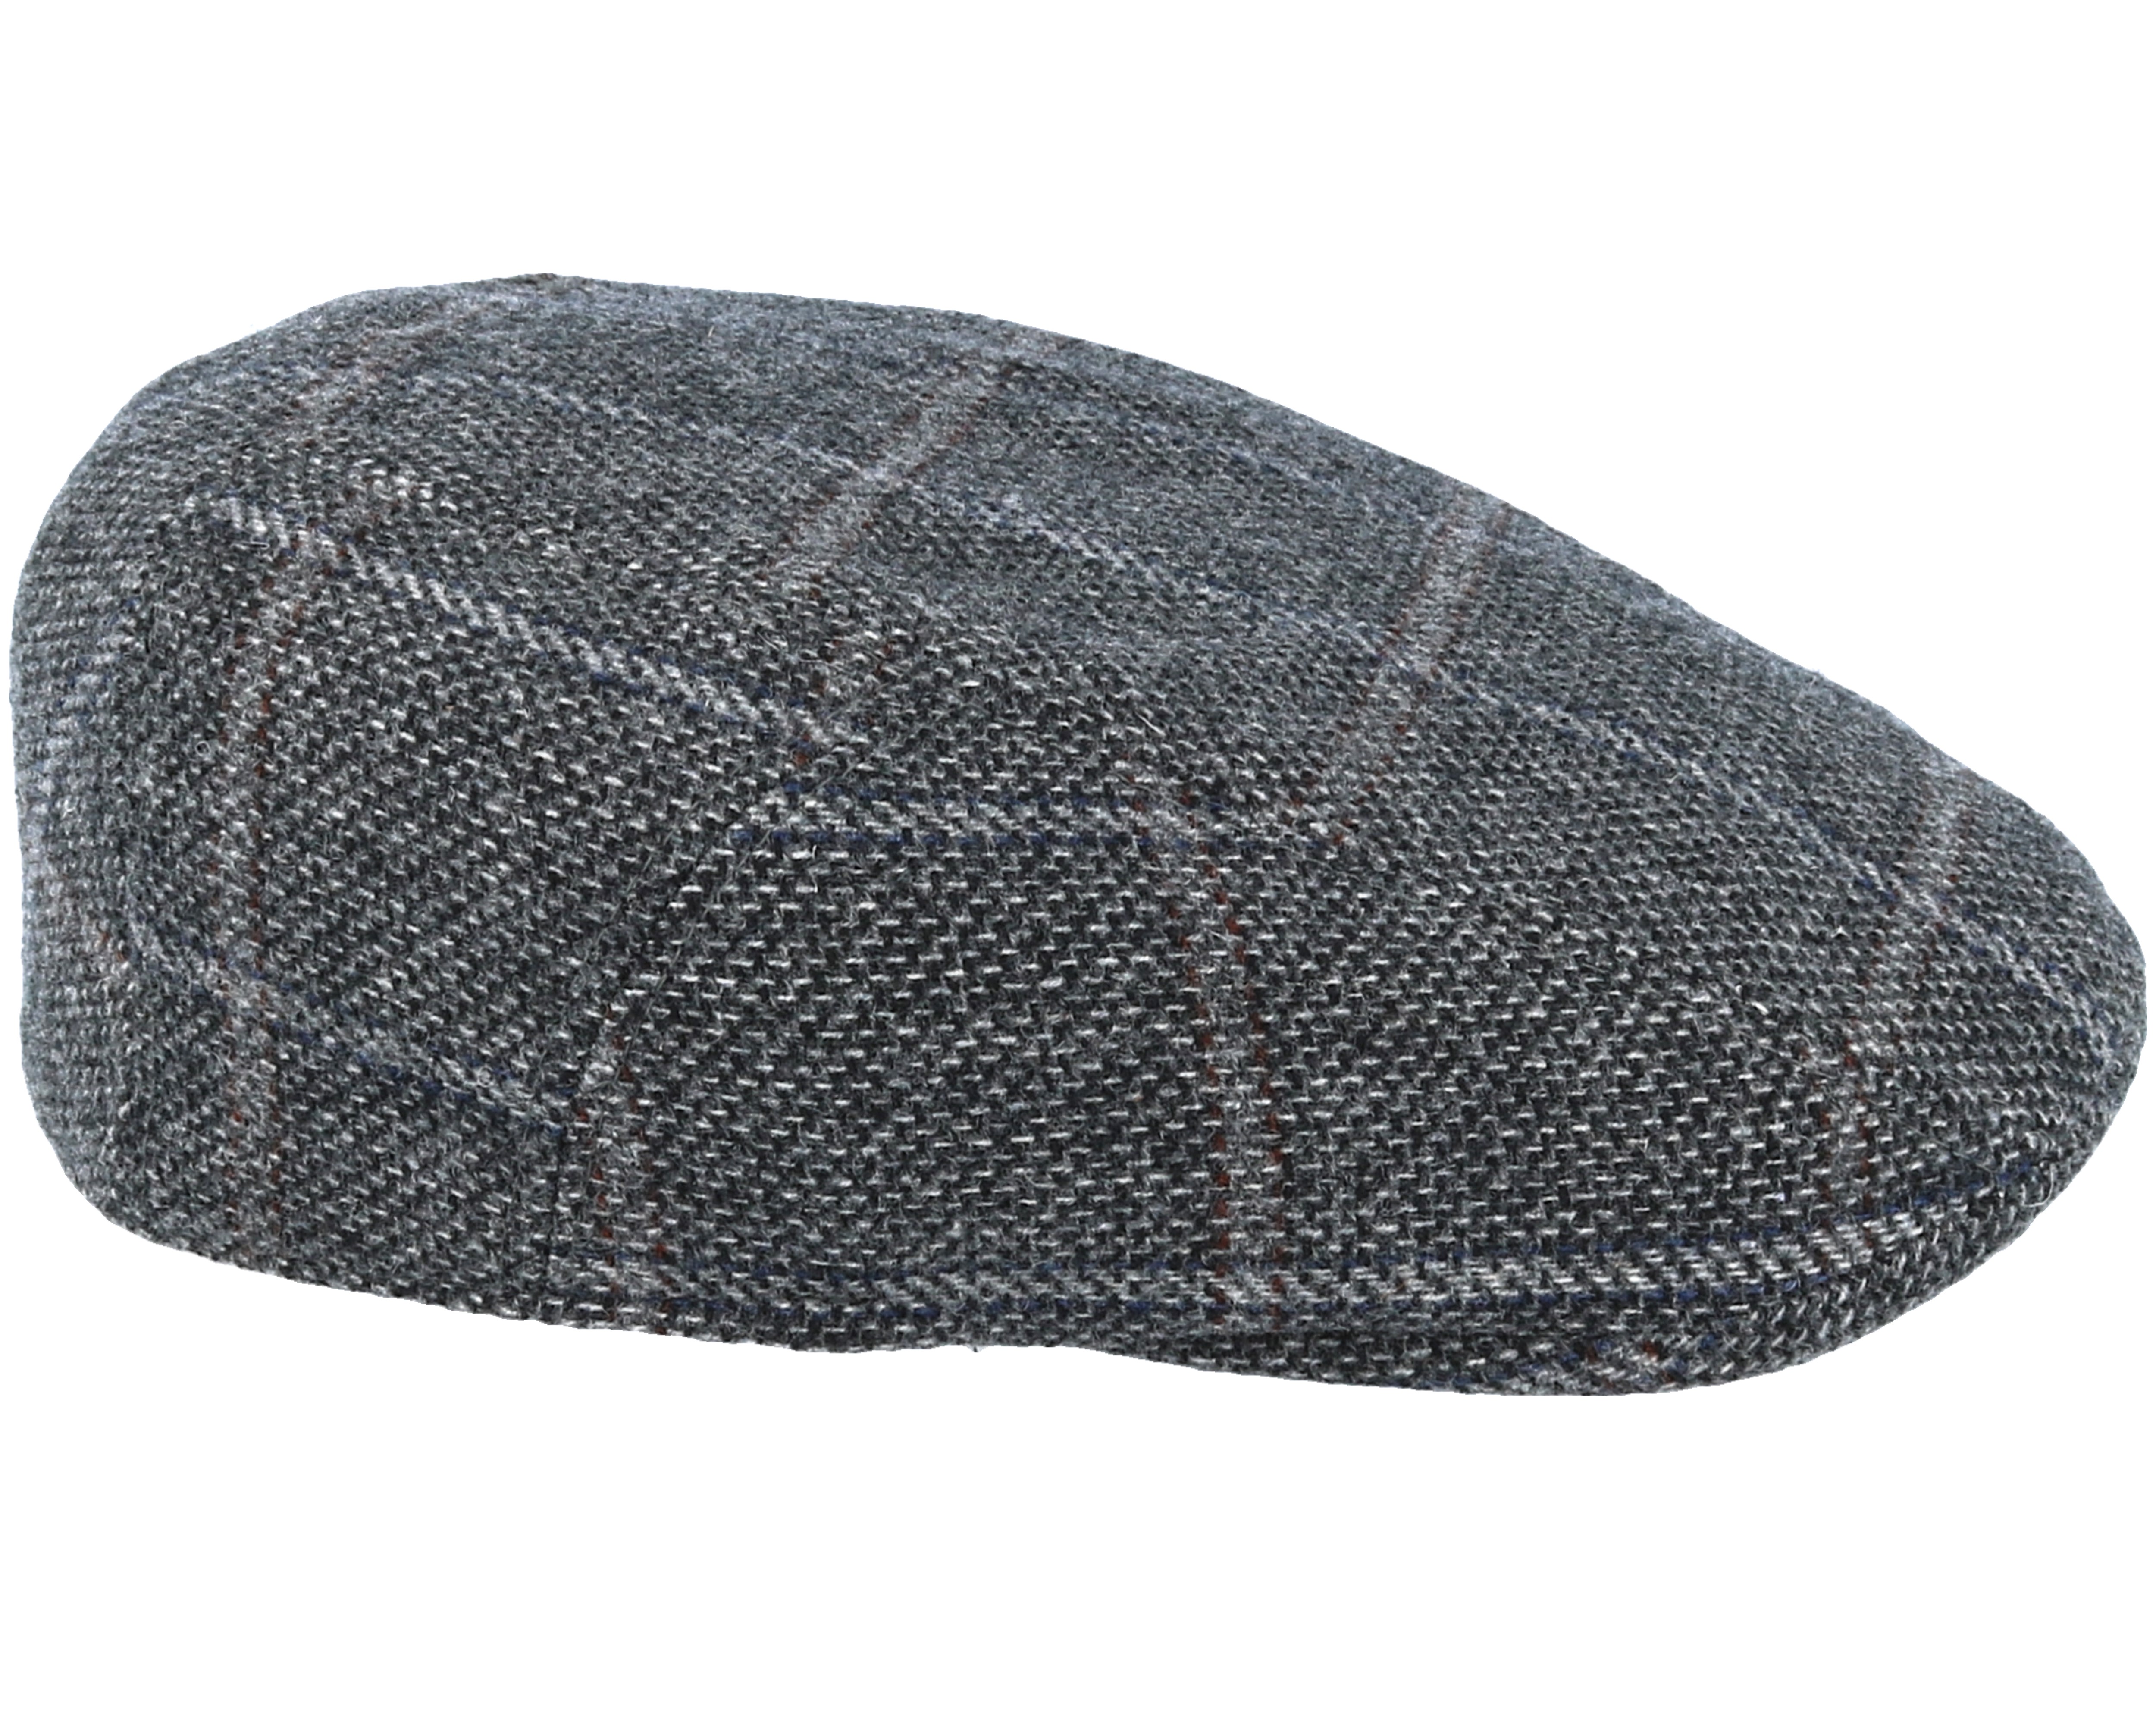 Ivy Wool Grey Flat Cap - Stetson caps | Hatstore.co.uk